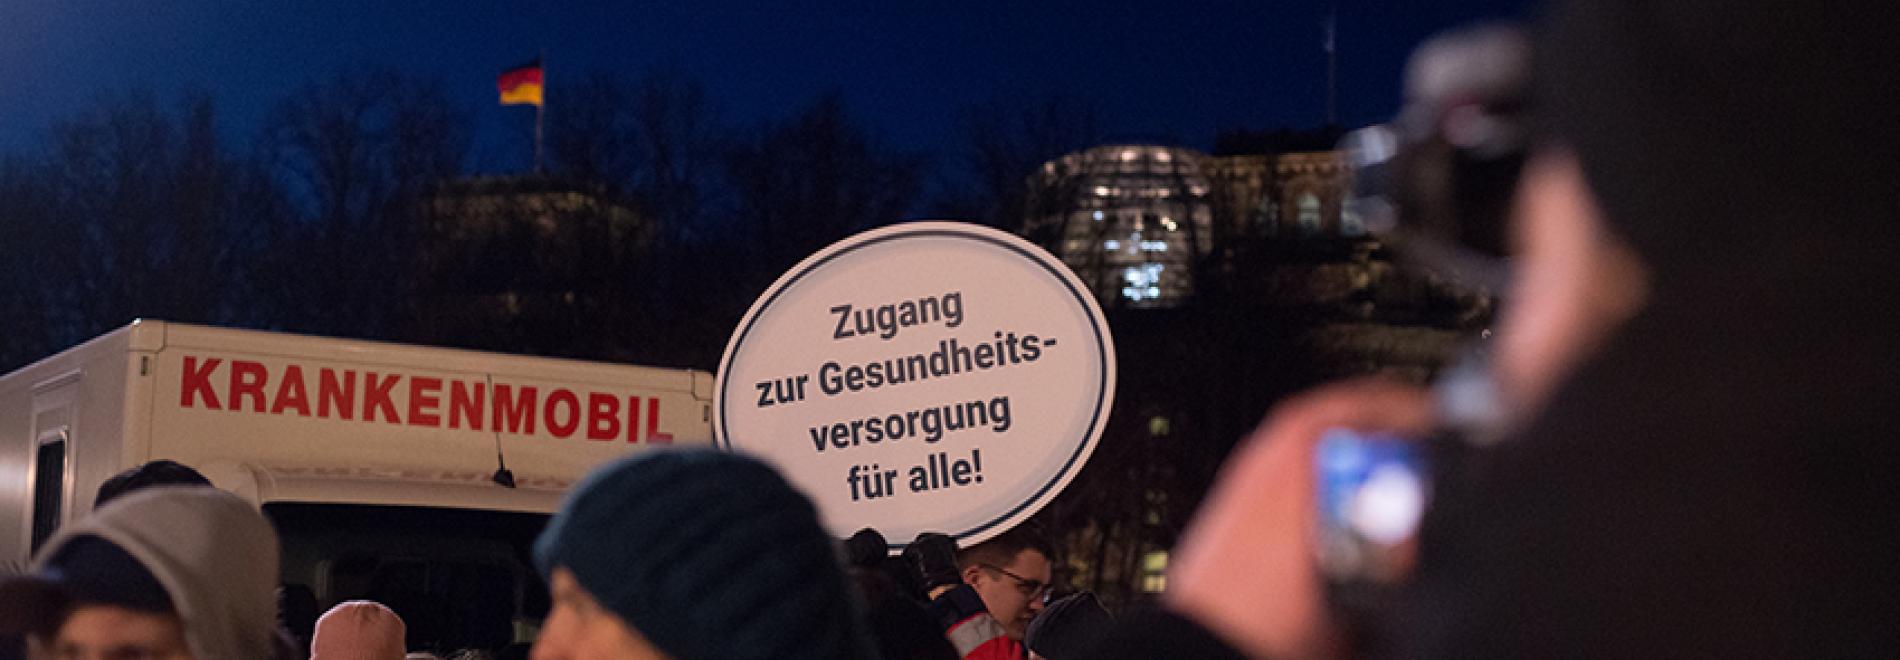 Demonstration am Brandenburger Tor. Foto: Renate Chueire